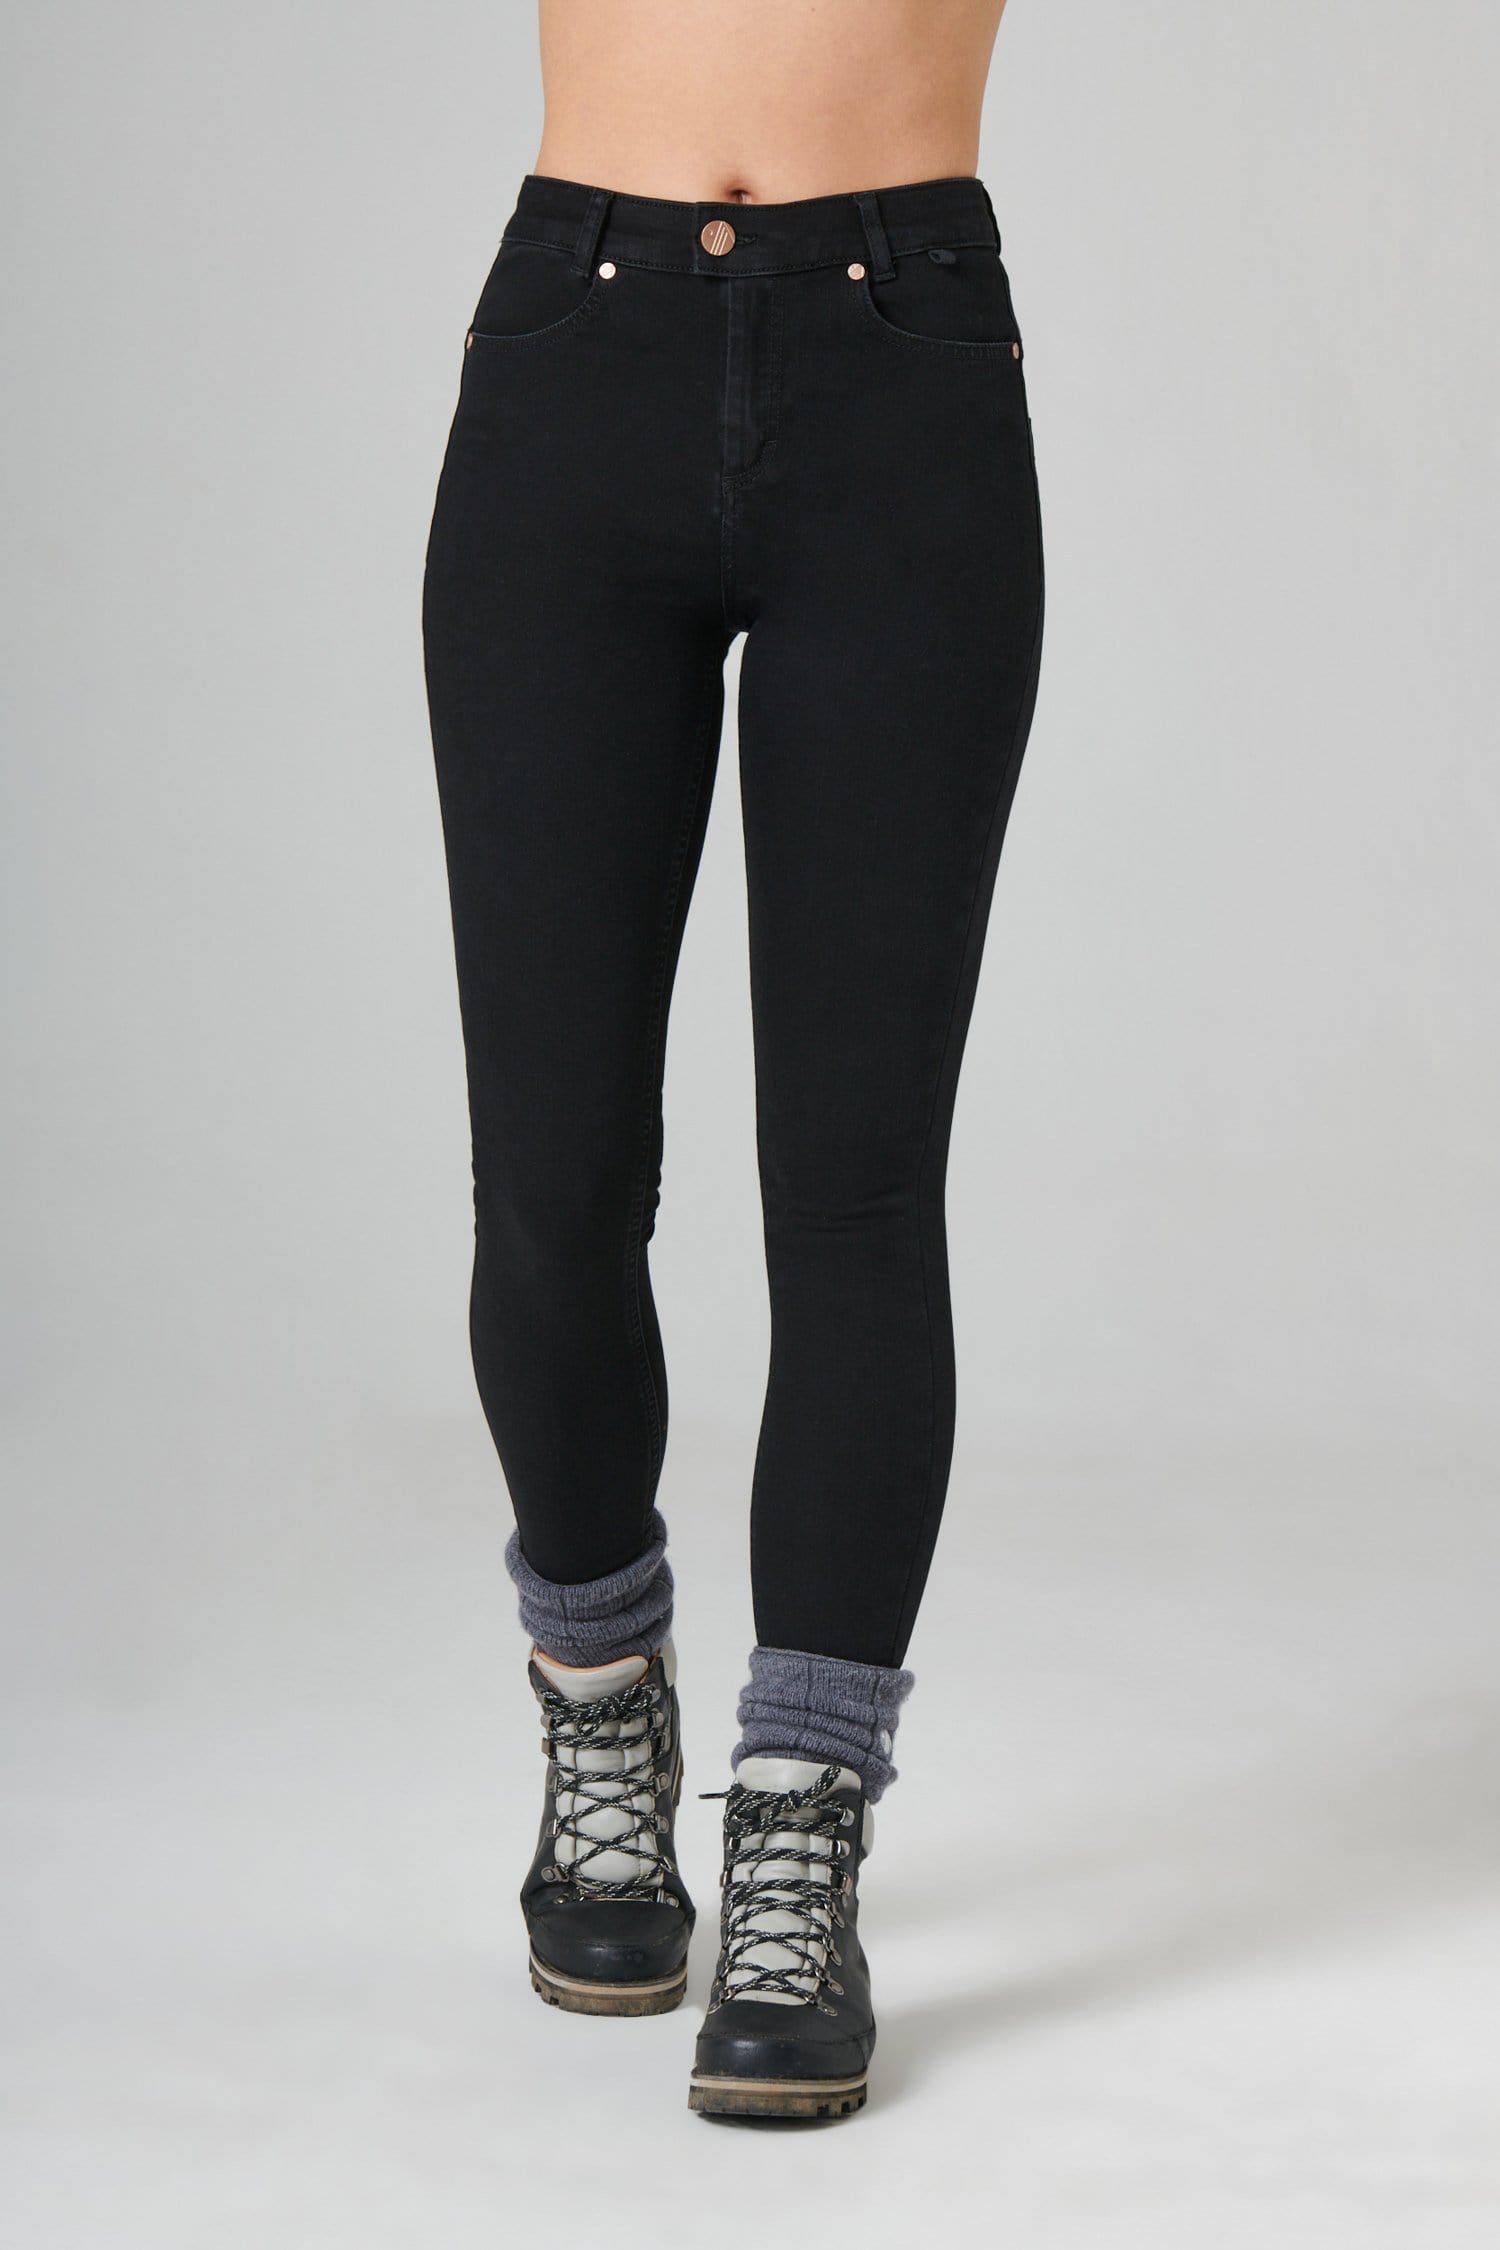 The Skinny Outdoor Jeans - Black Denim - 32p / Uk14 - Womens - Acai Outdoorwear